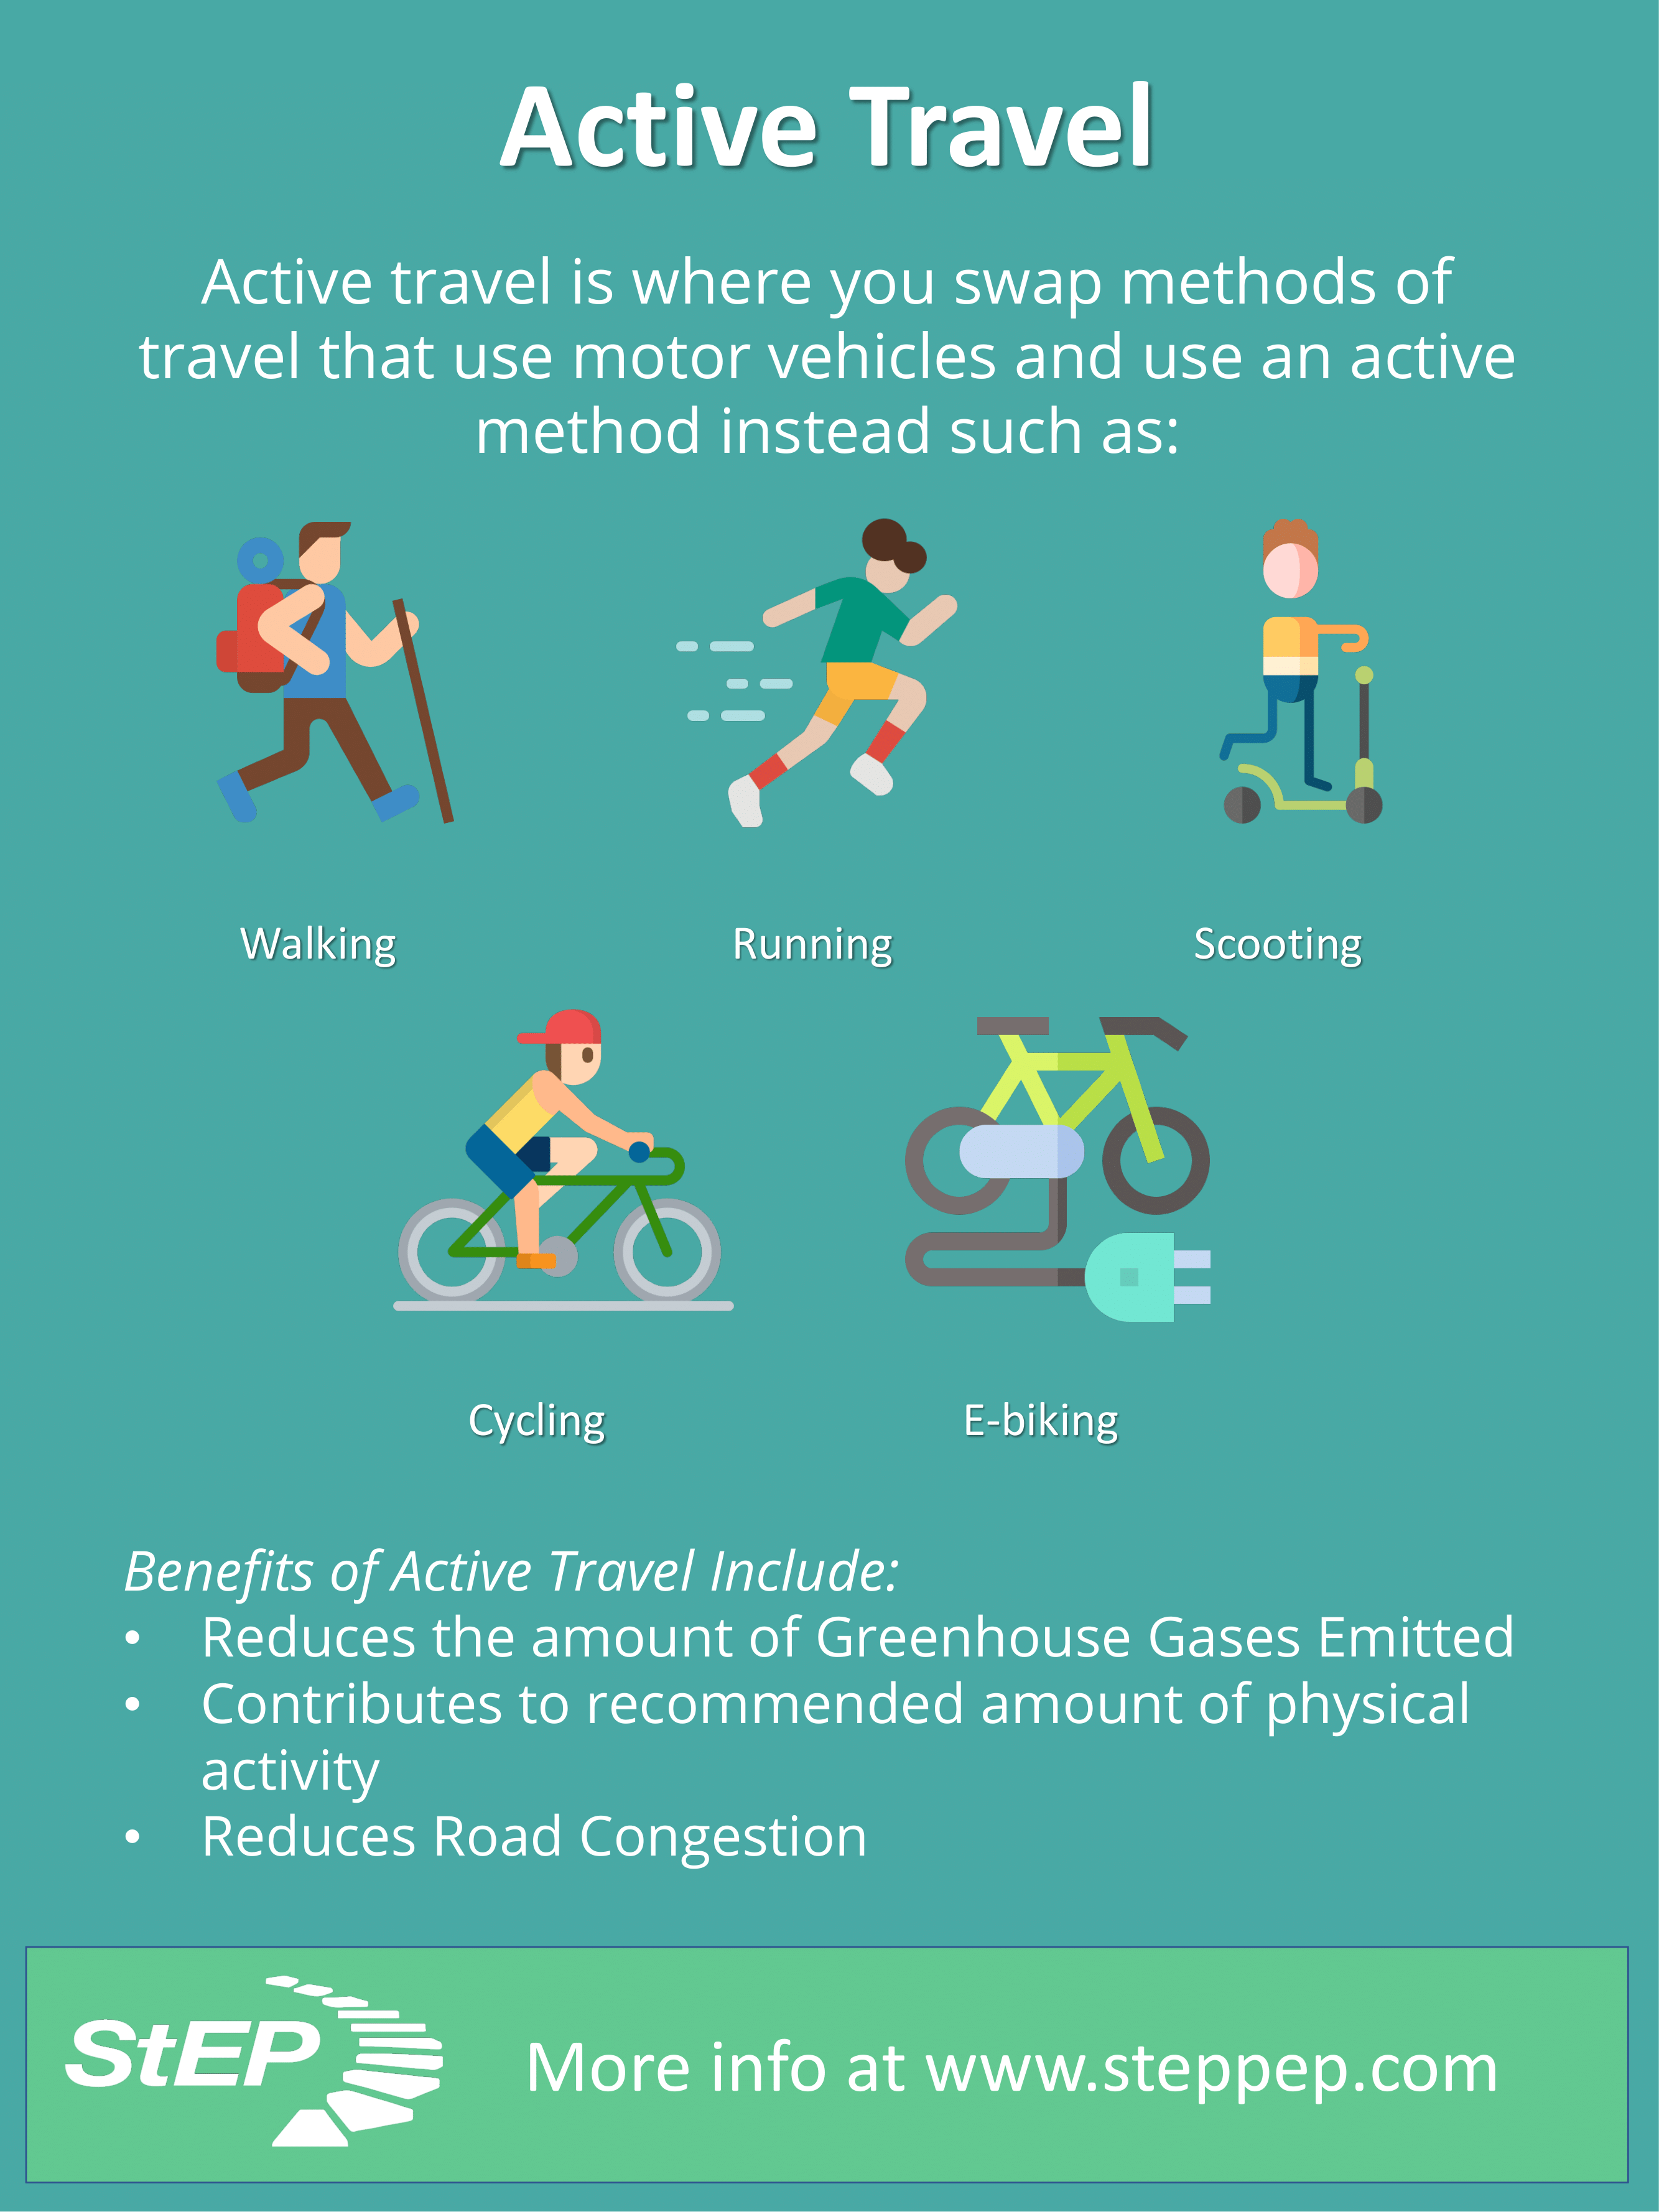 active travel benefits